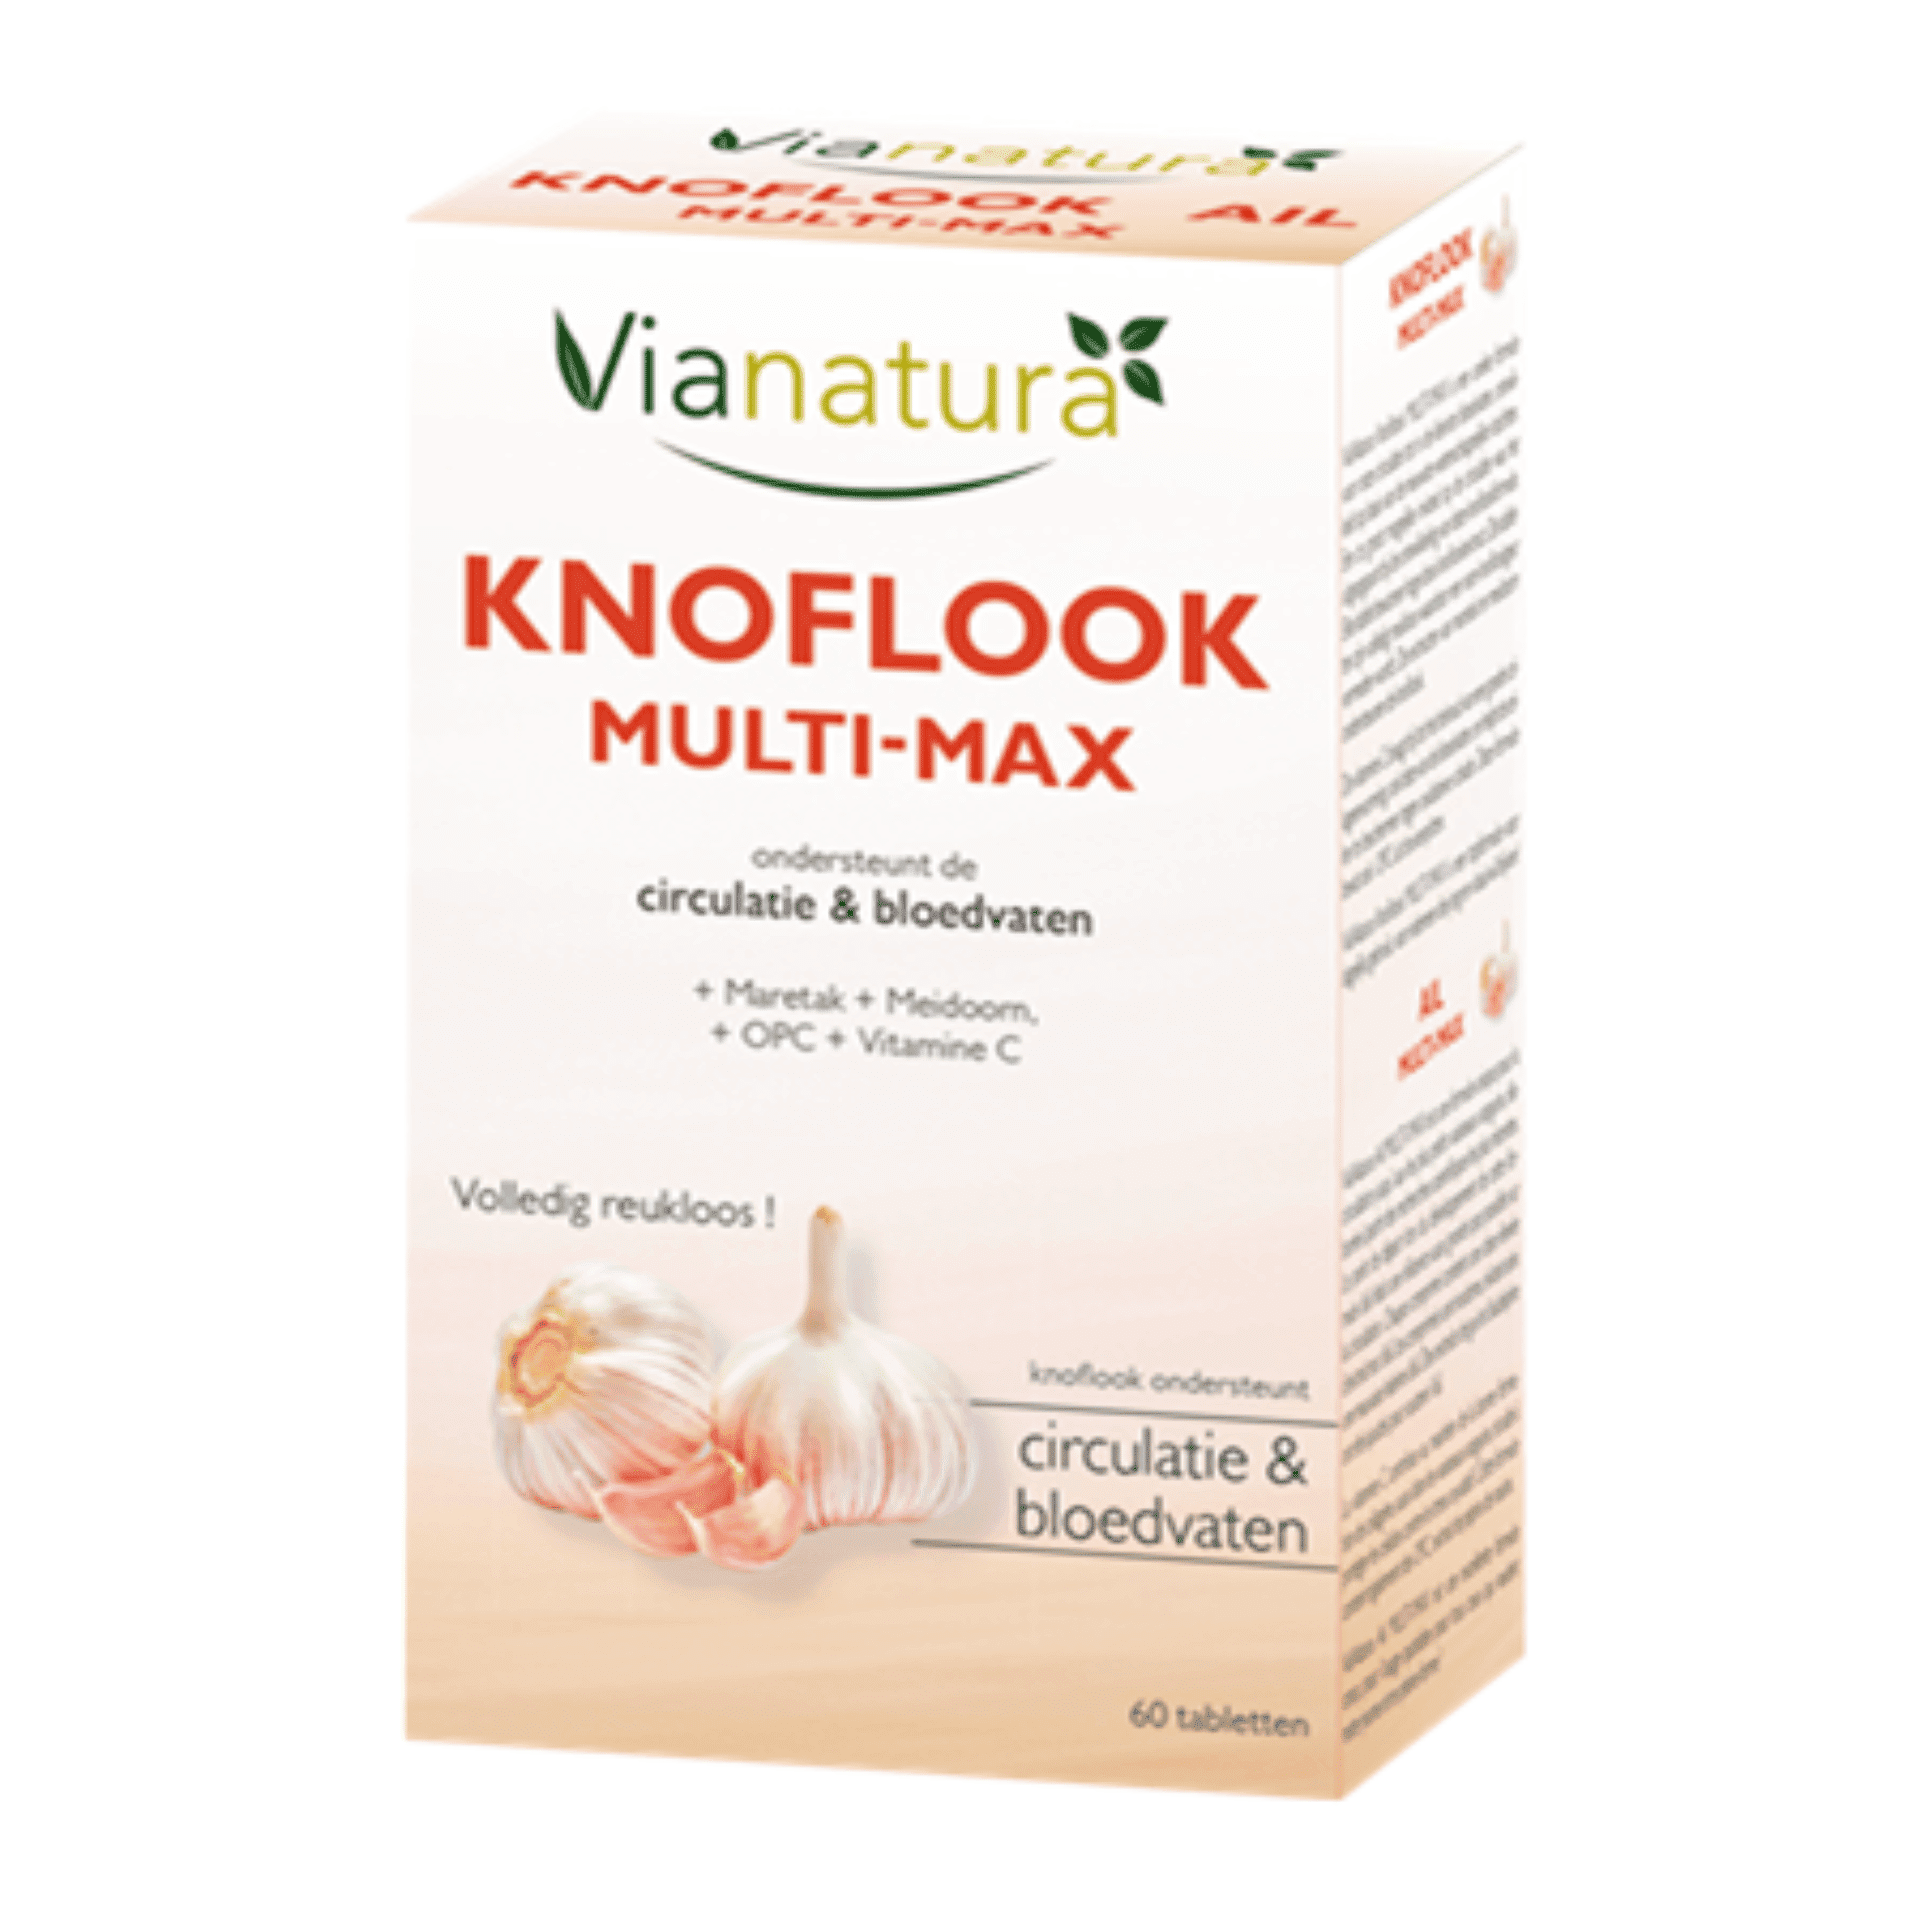 Vianatura Knoflook Multi-Max 60 tabletten